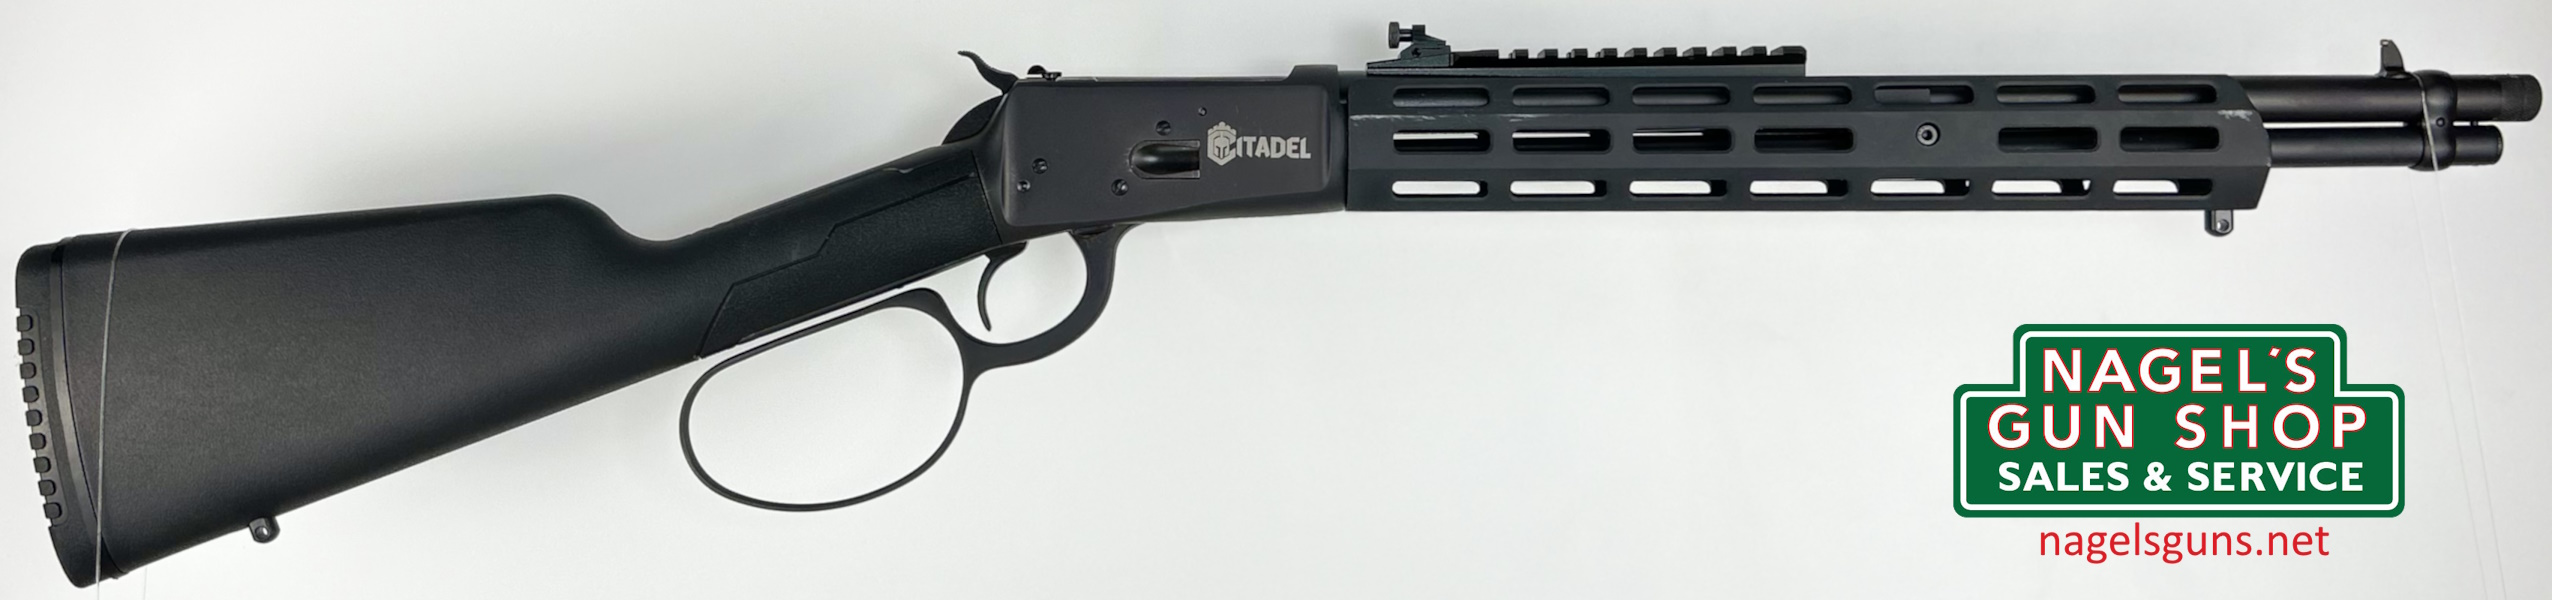 Citadel LevTac-92 357 Magnum Rifle